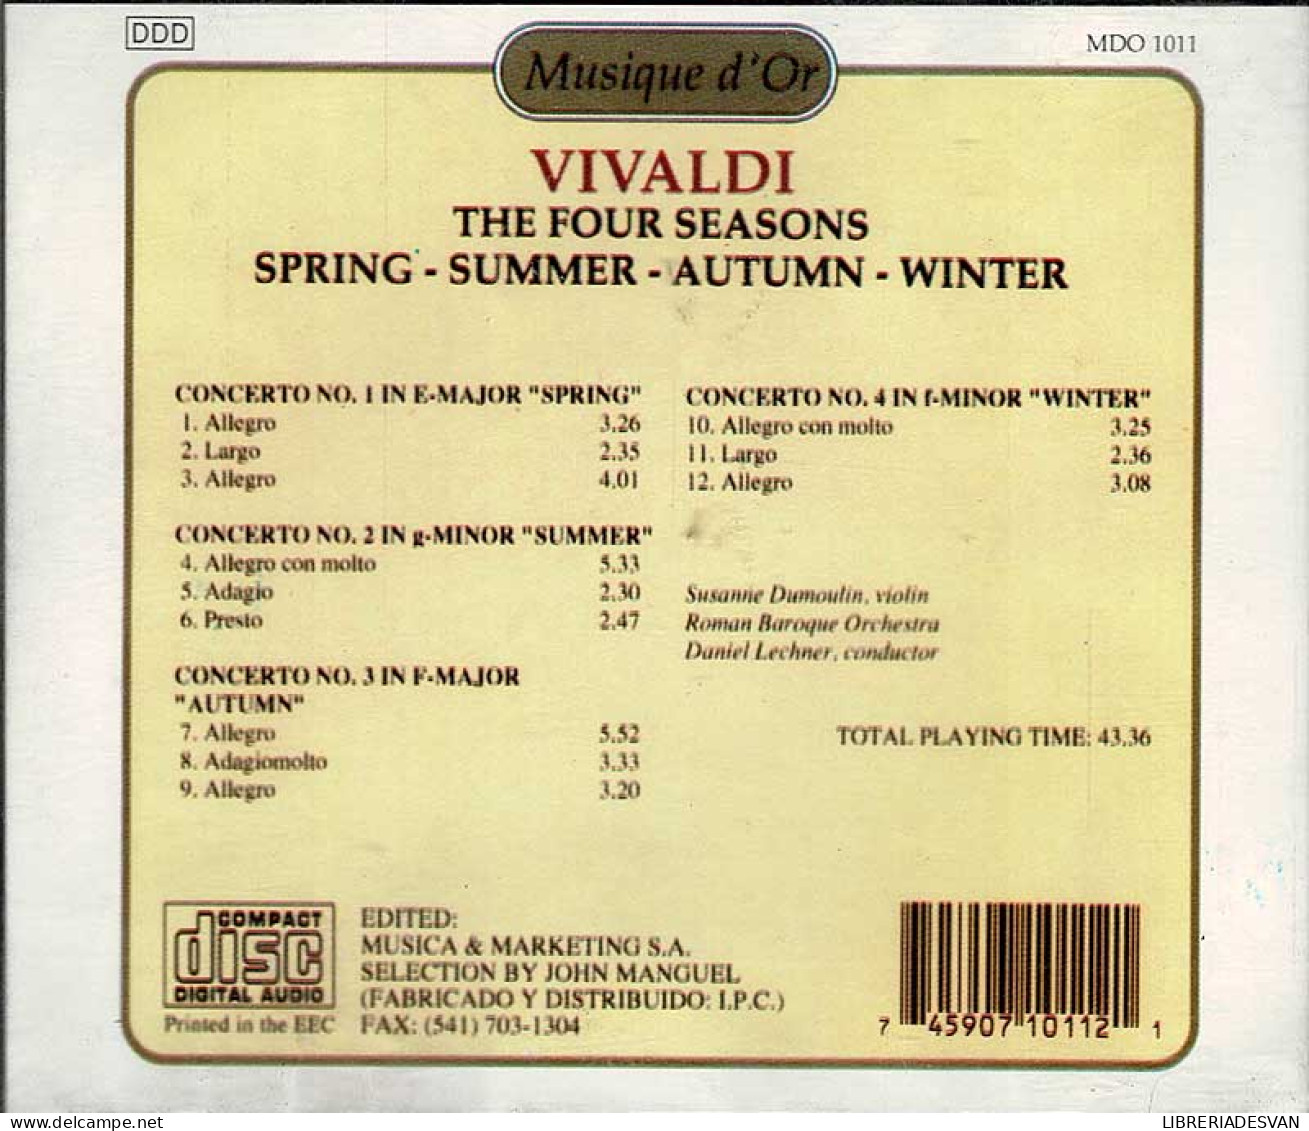 Vivaldi - The Four Seasons. CD - Klassik